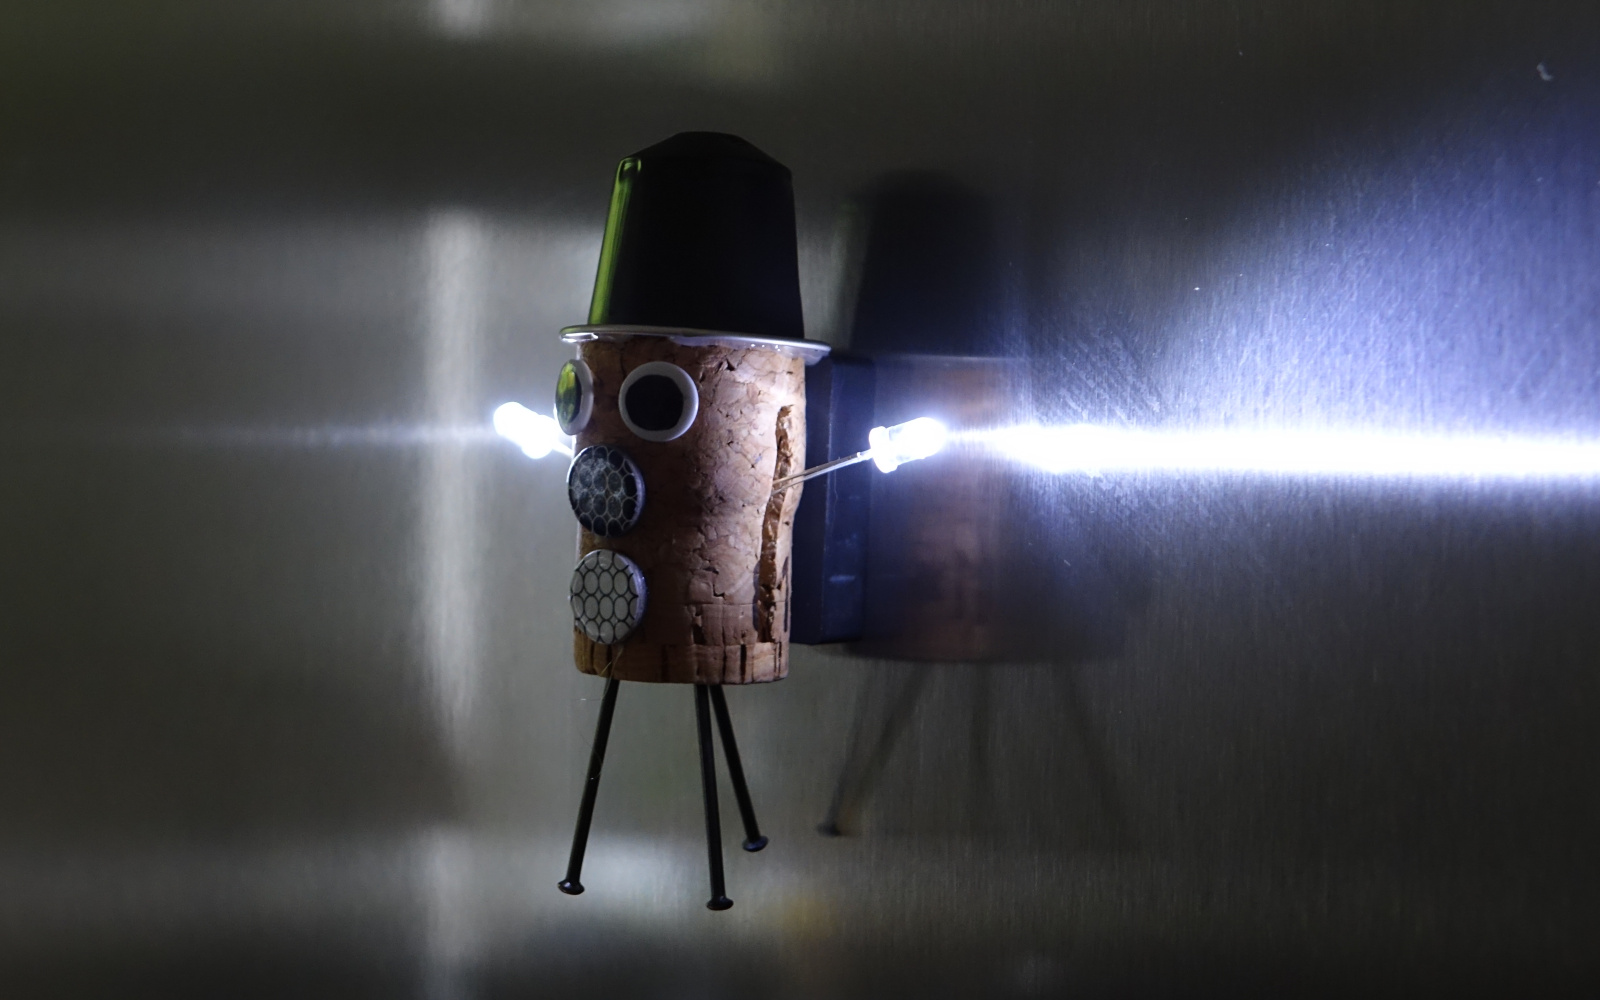 Fantasiefigur hängt mit LEDs am Kühlschrank